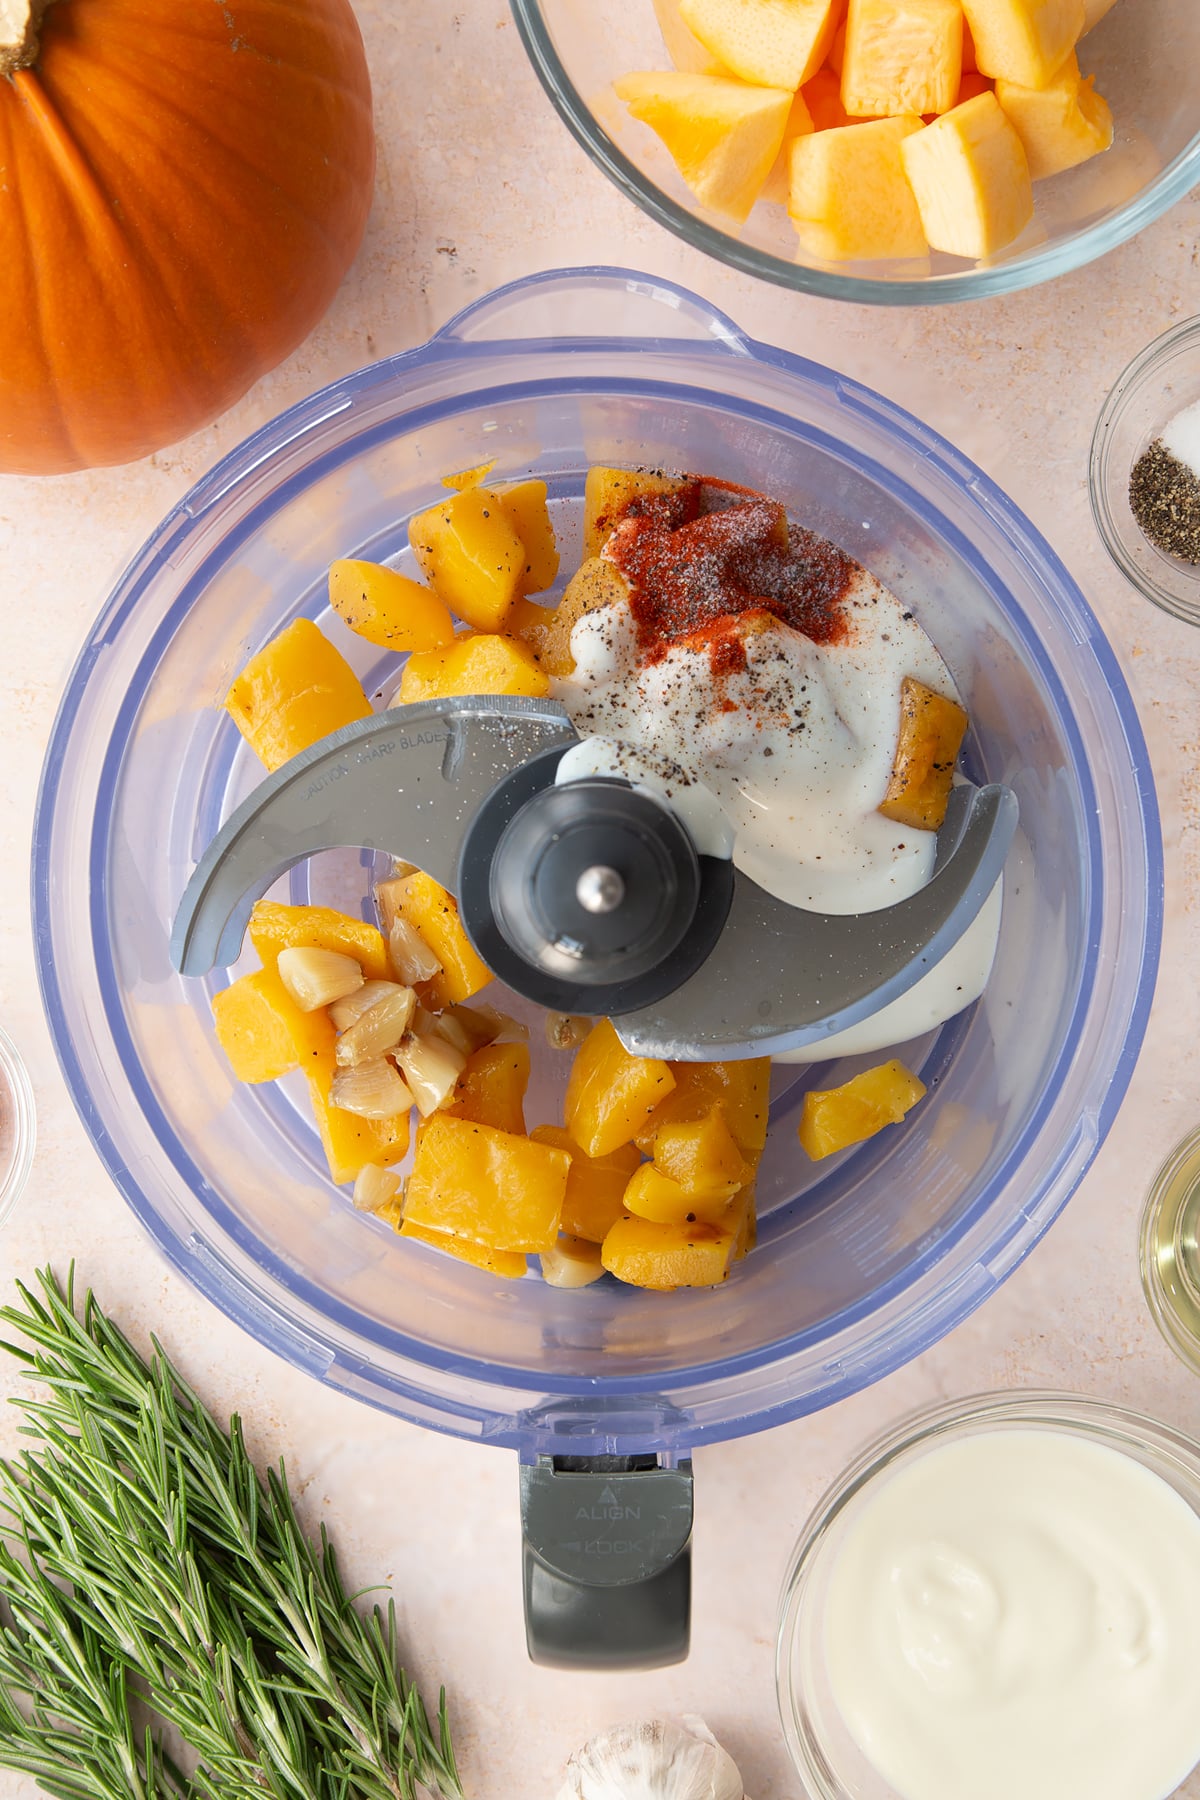 Roasted pumpkin and garlic, paprika and vegan yogurt in a food processor bowl.